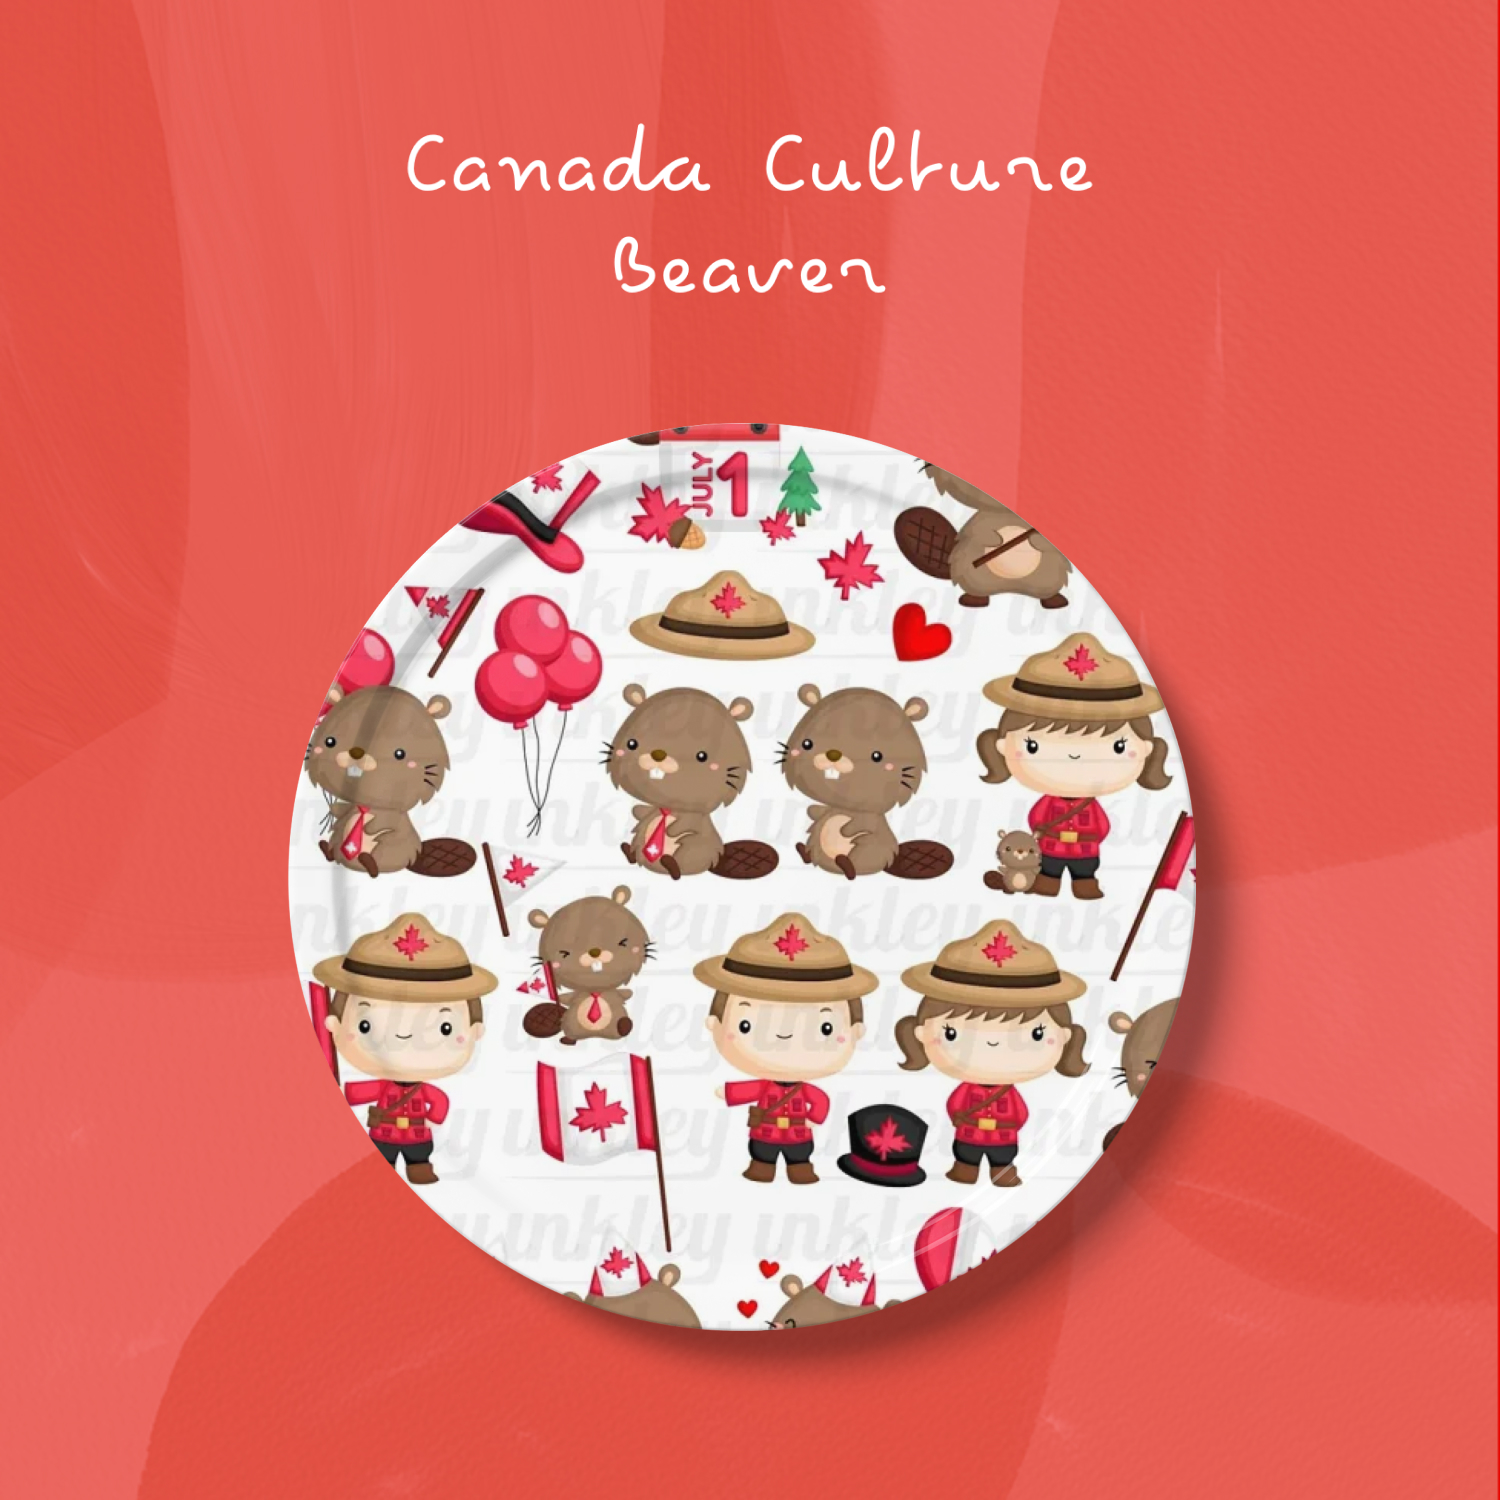 Preview canada culture beaver clipart.